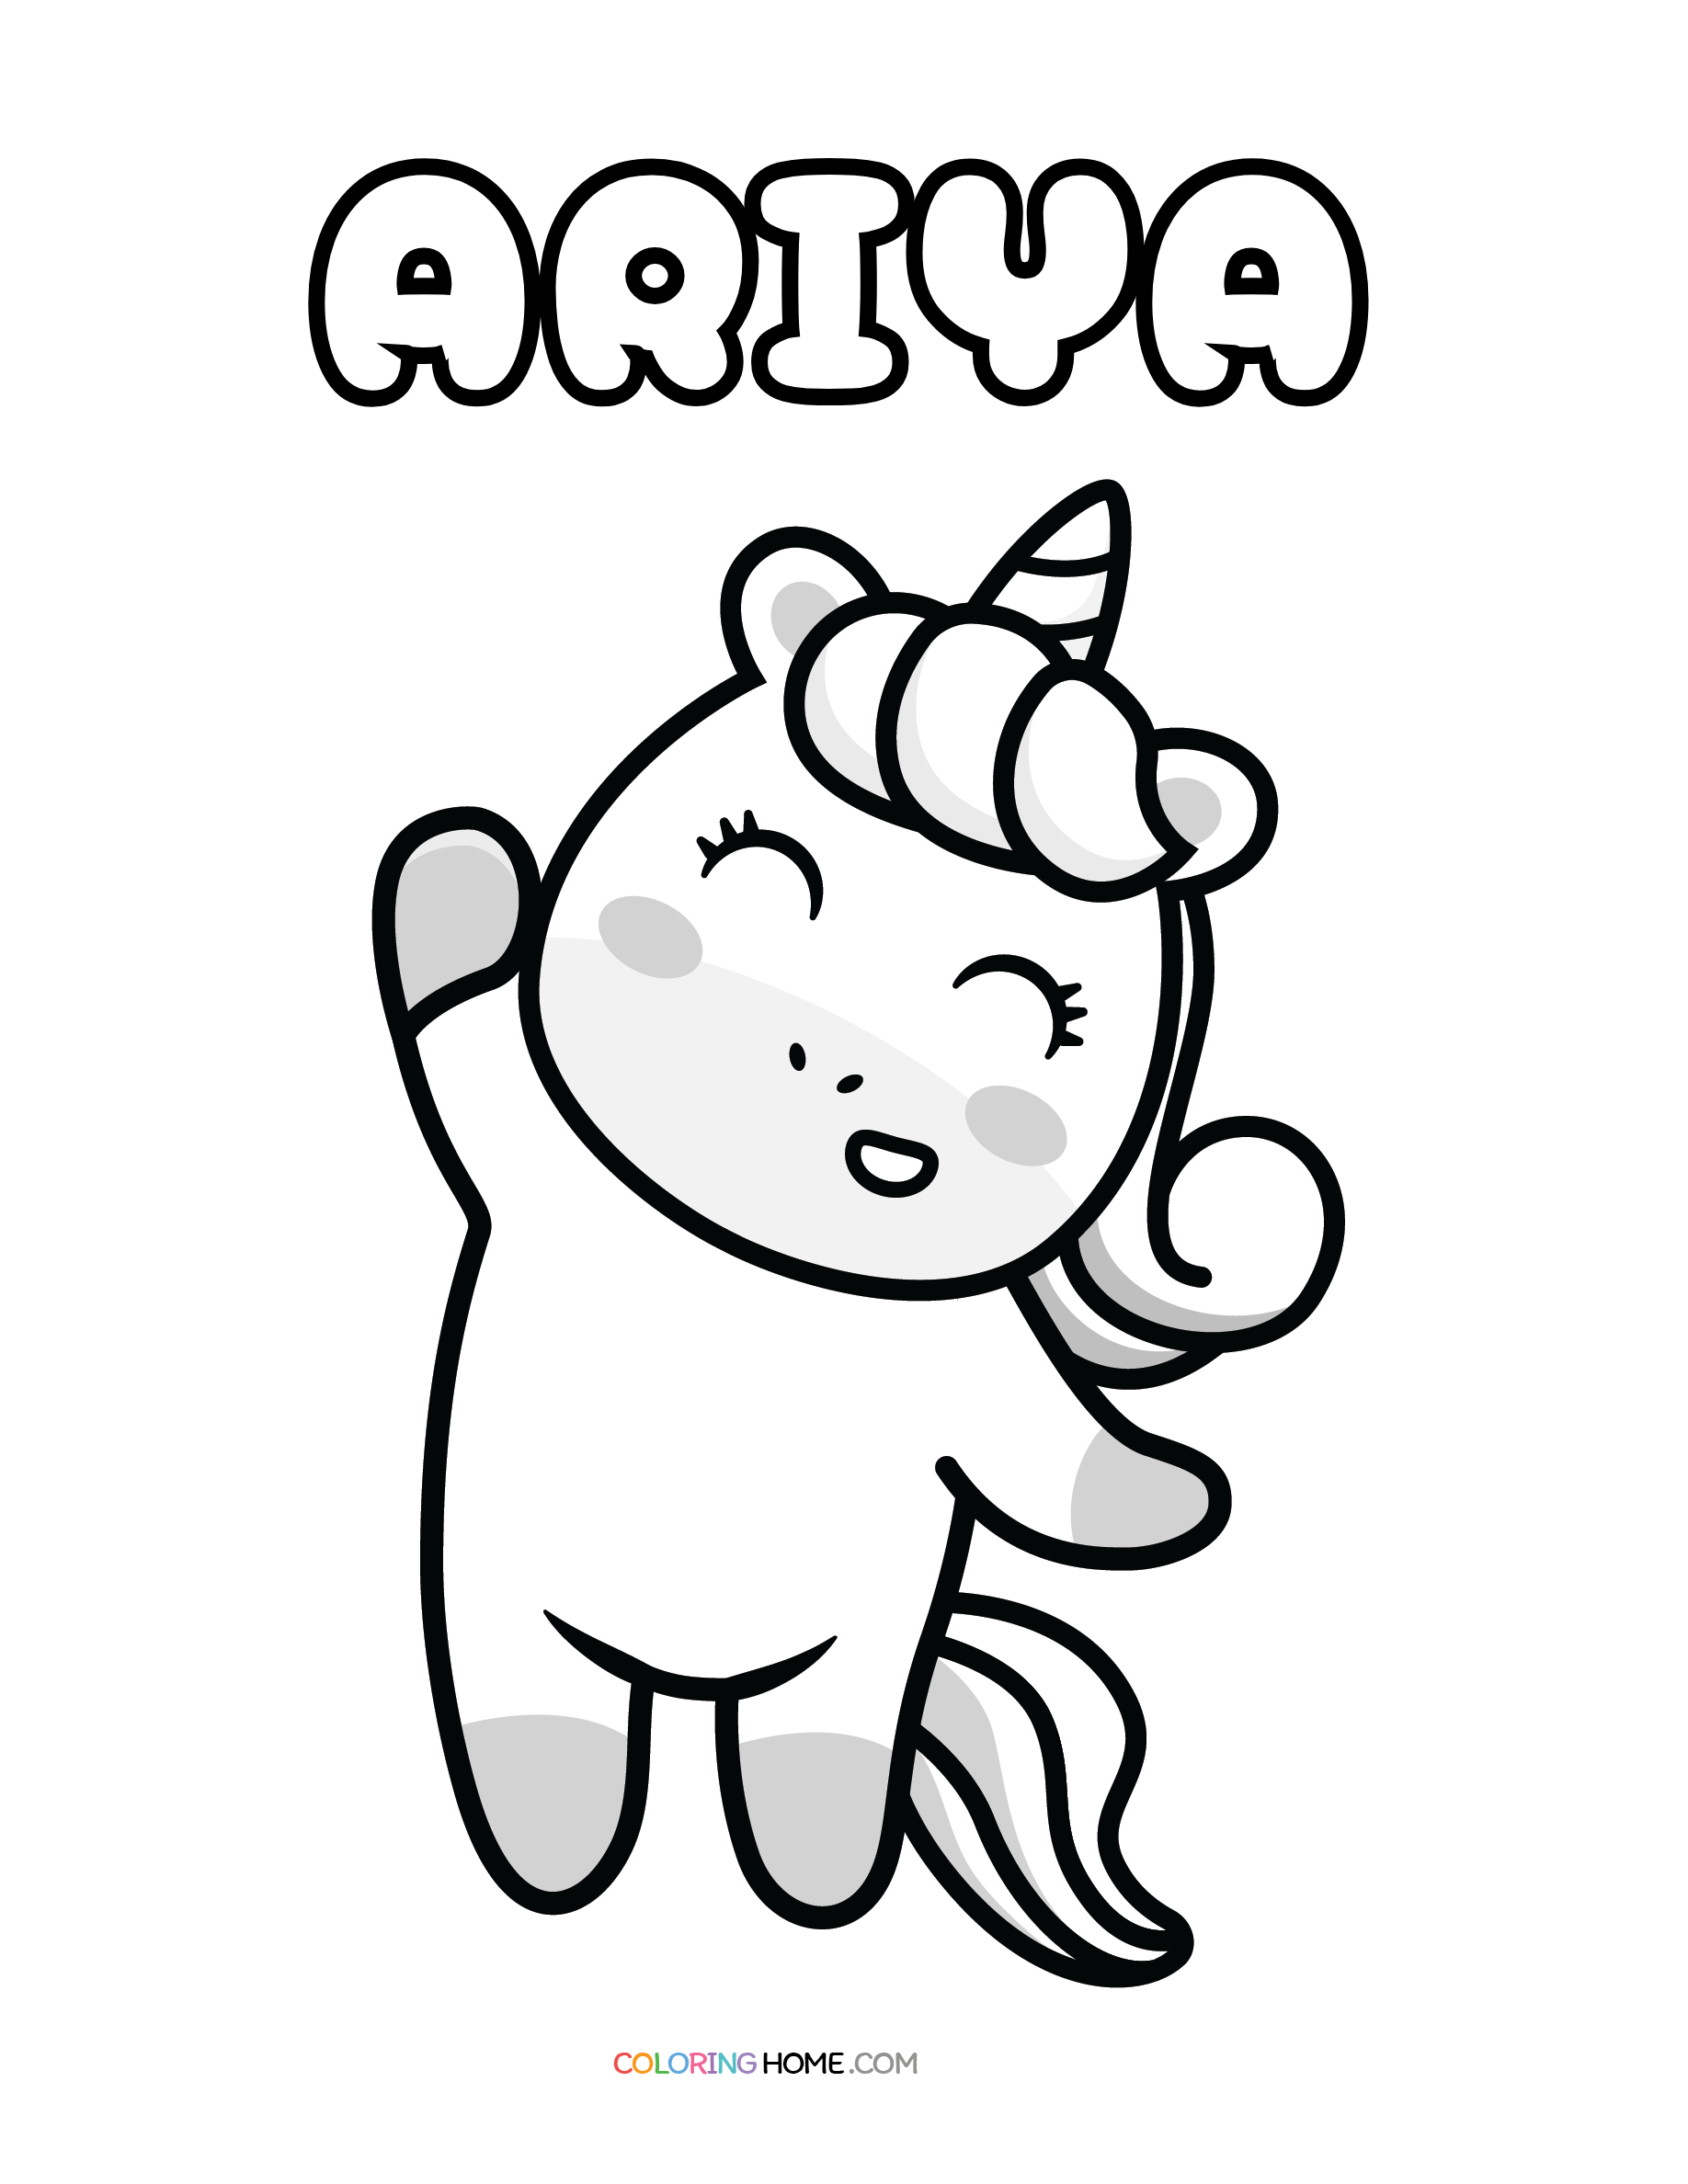 Ariya unicorn coloring page